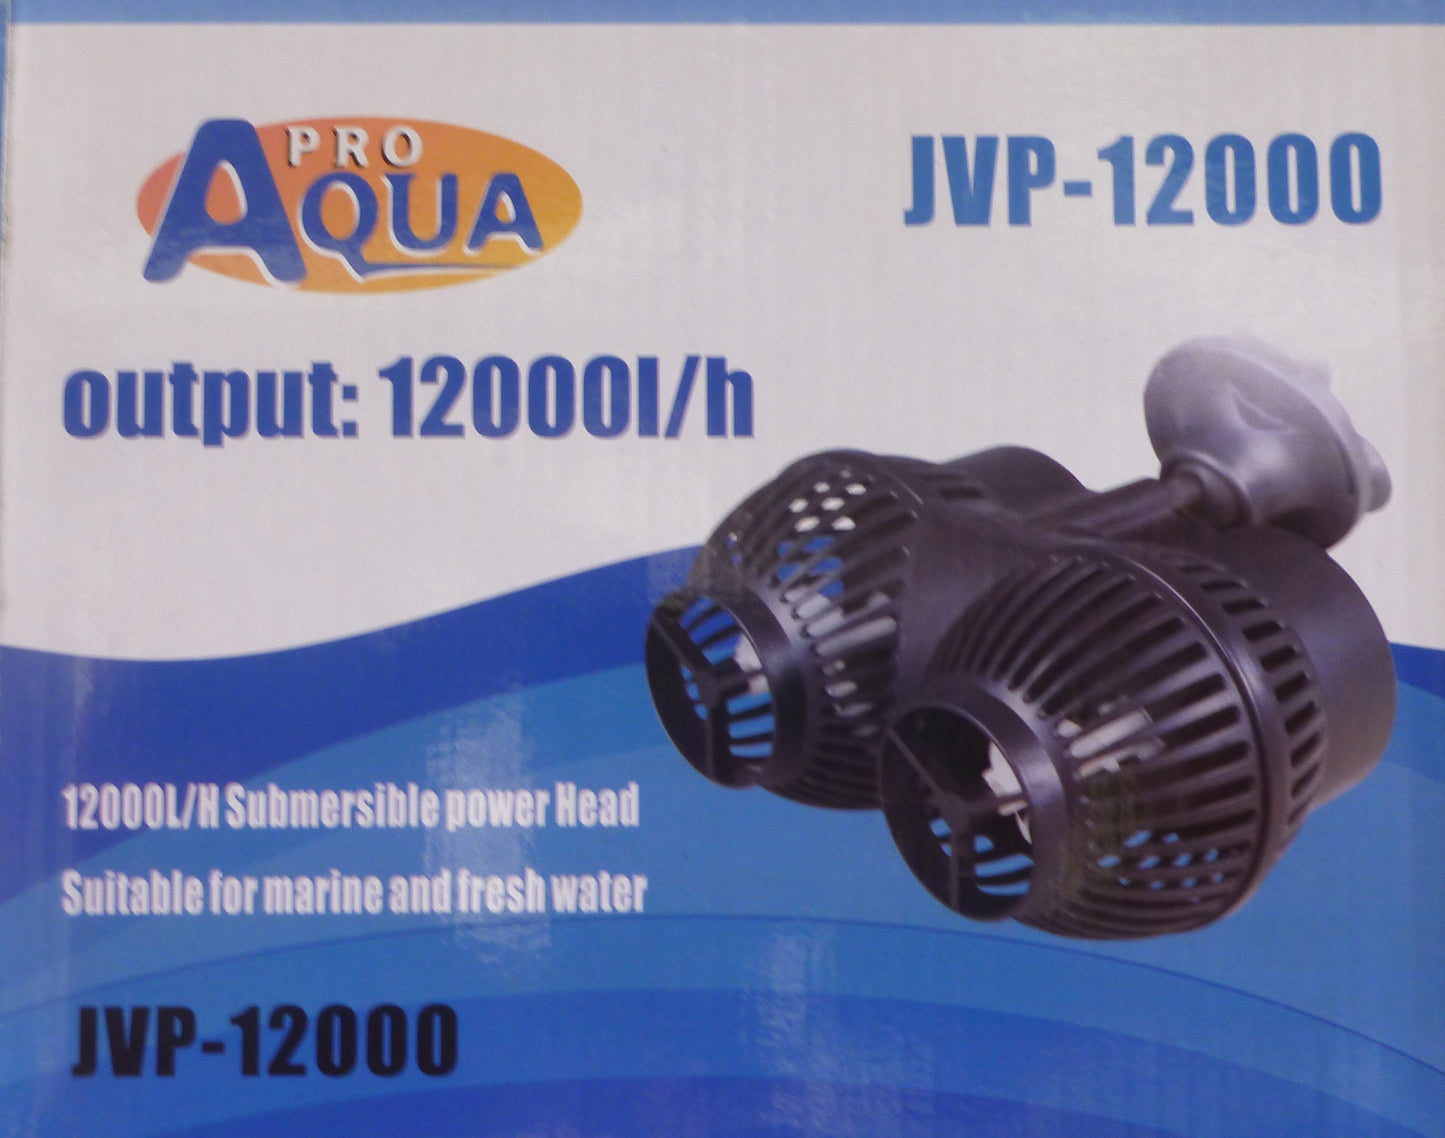 JVP-12000L/H Power Head 24 Watt Marine